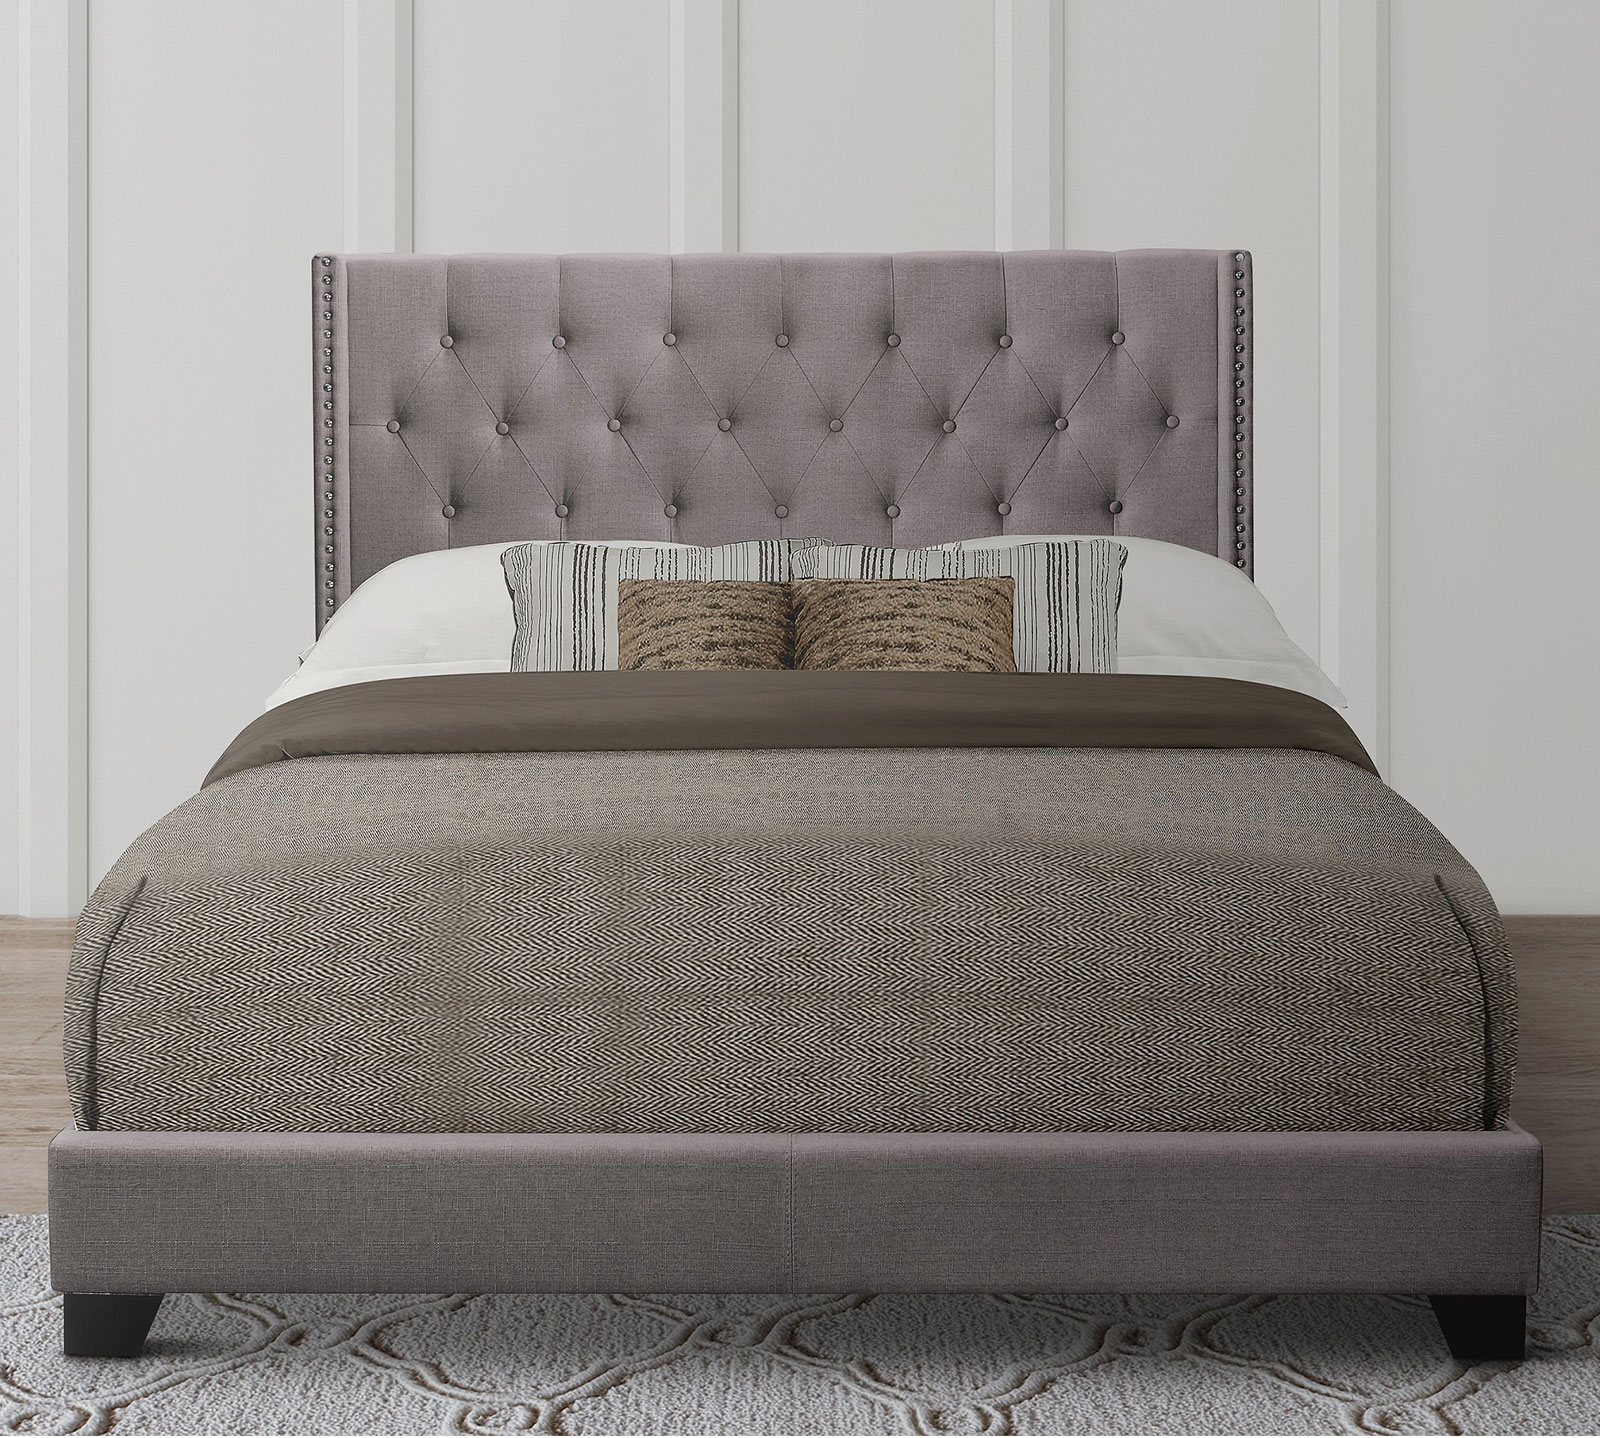 Homelegance Upholstered Bed Set | Queen | Avery Bed Frame & Headboard | Gray